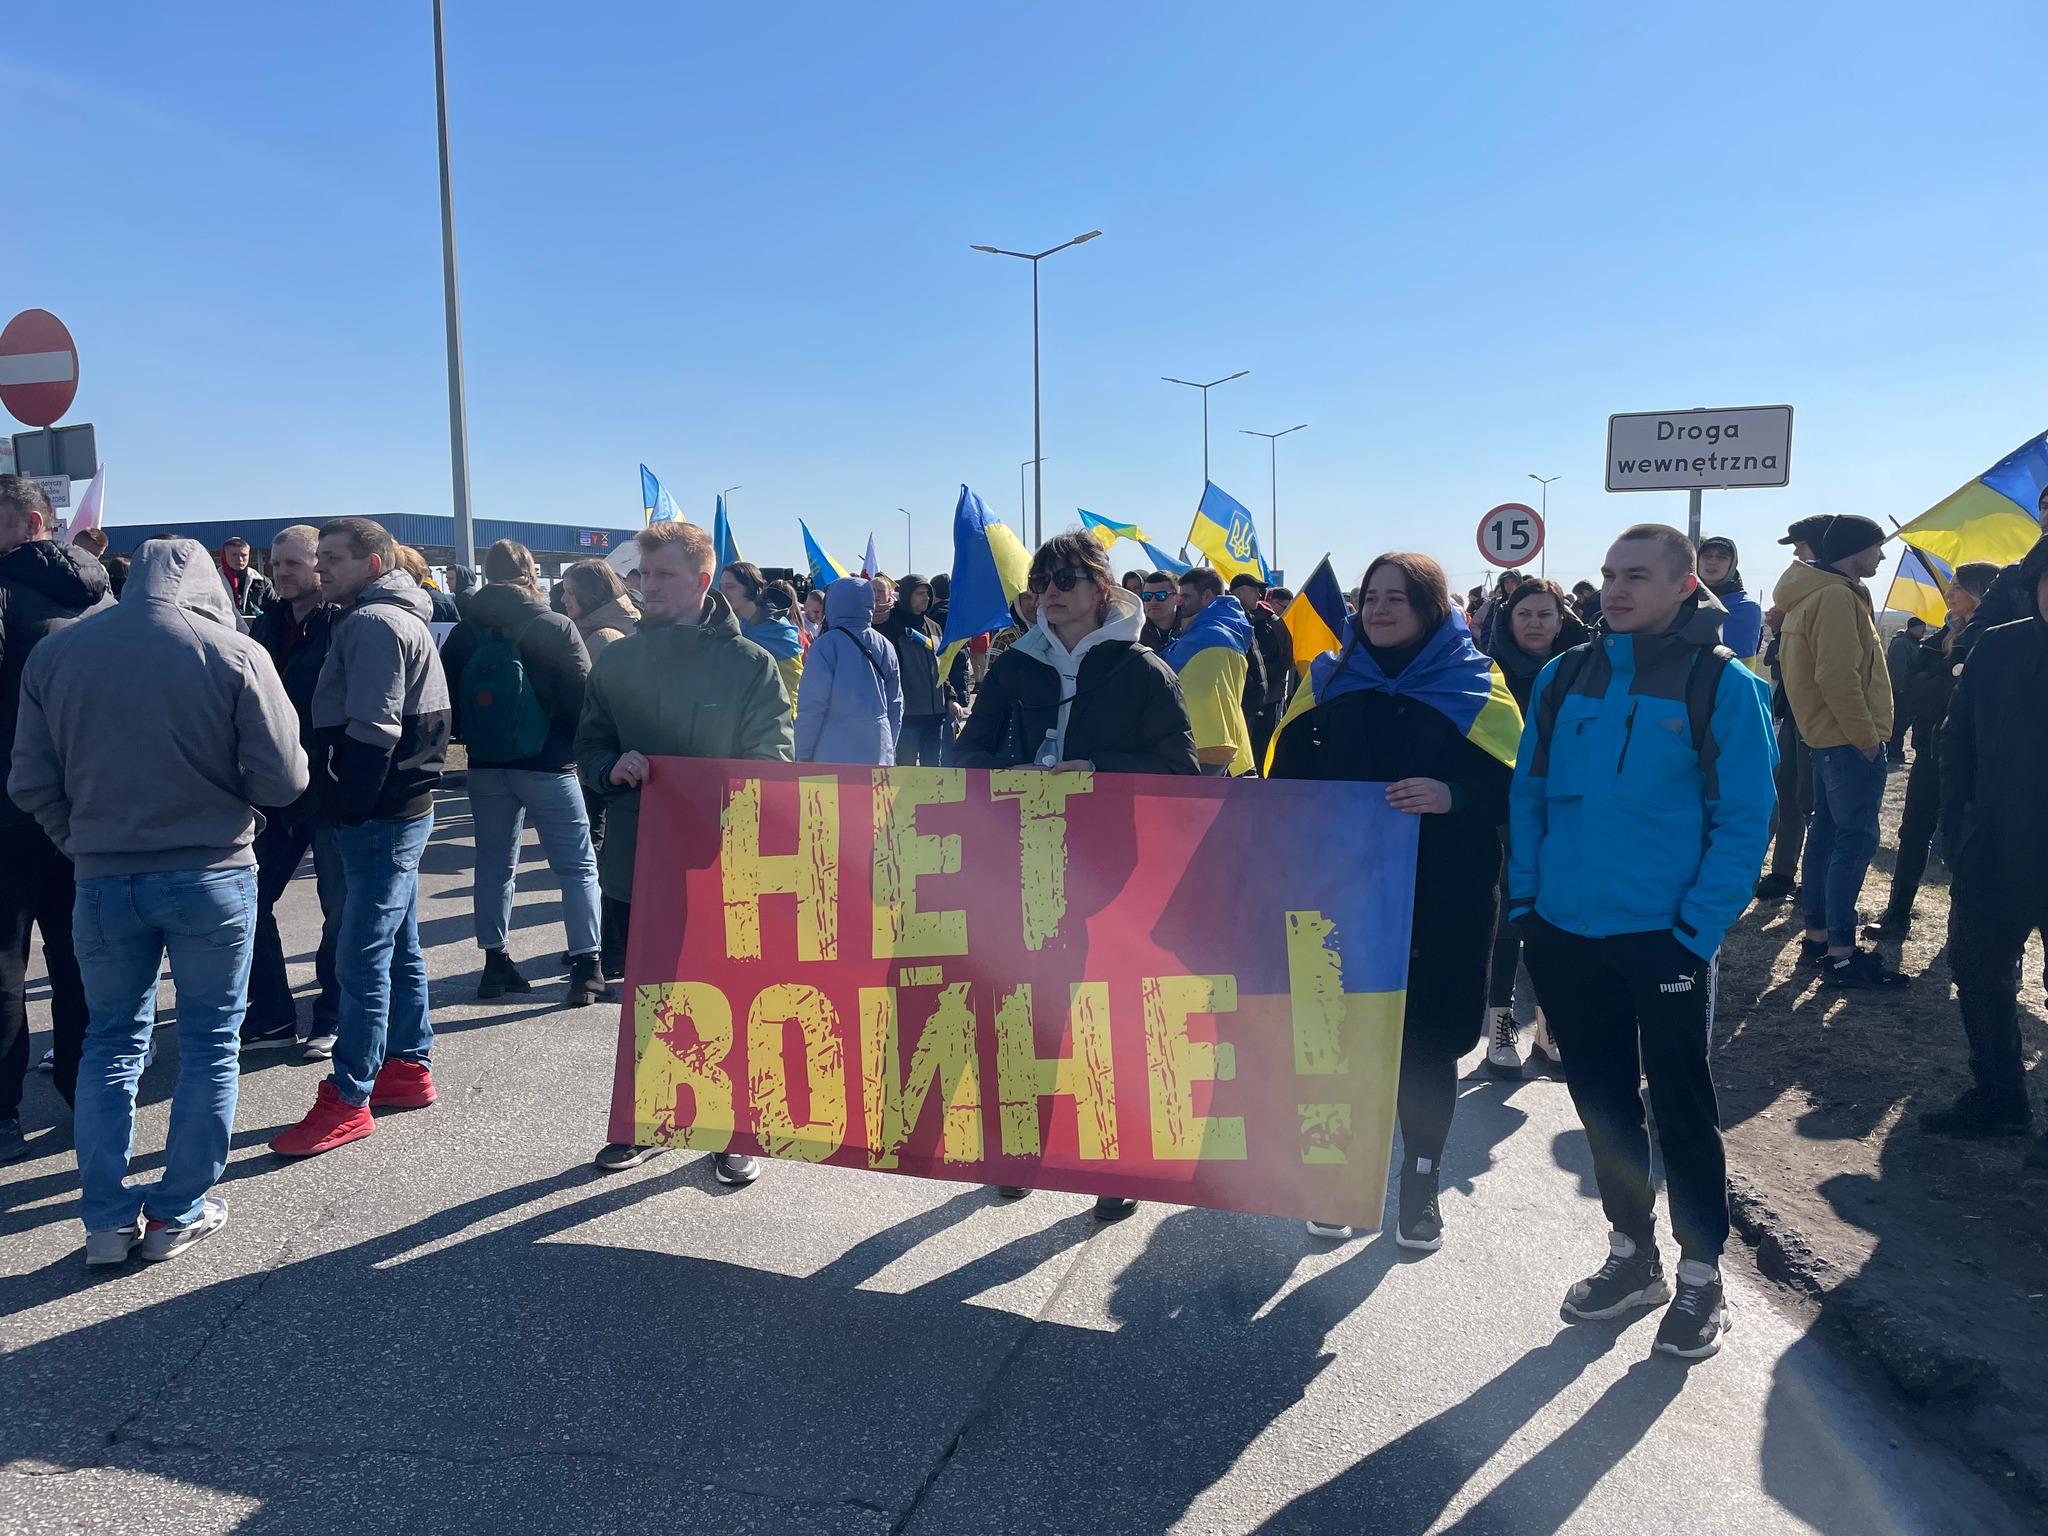 Ukrainian activists block trucks at Poland-Belarus border, demand halting EU trade with Russia